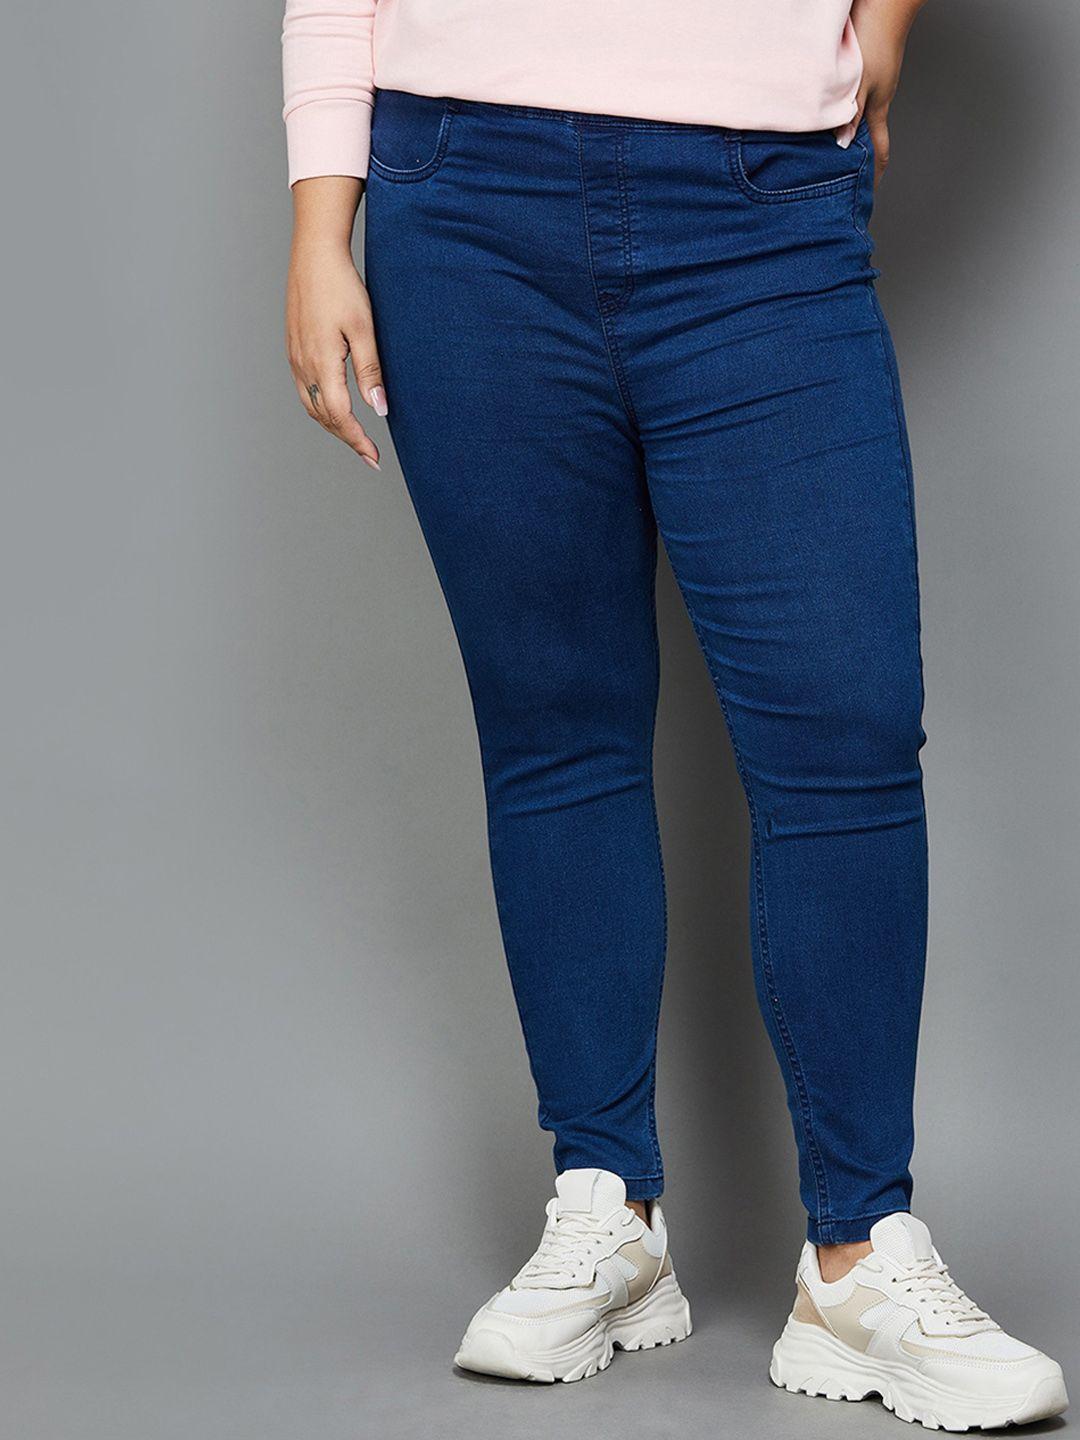 nexus by lifestyle women plus size mid-rise clean look cotton jeans